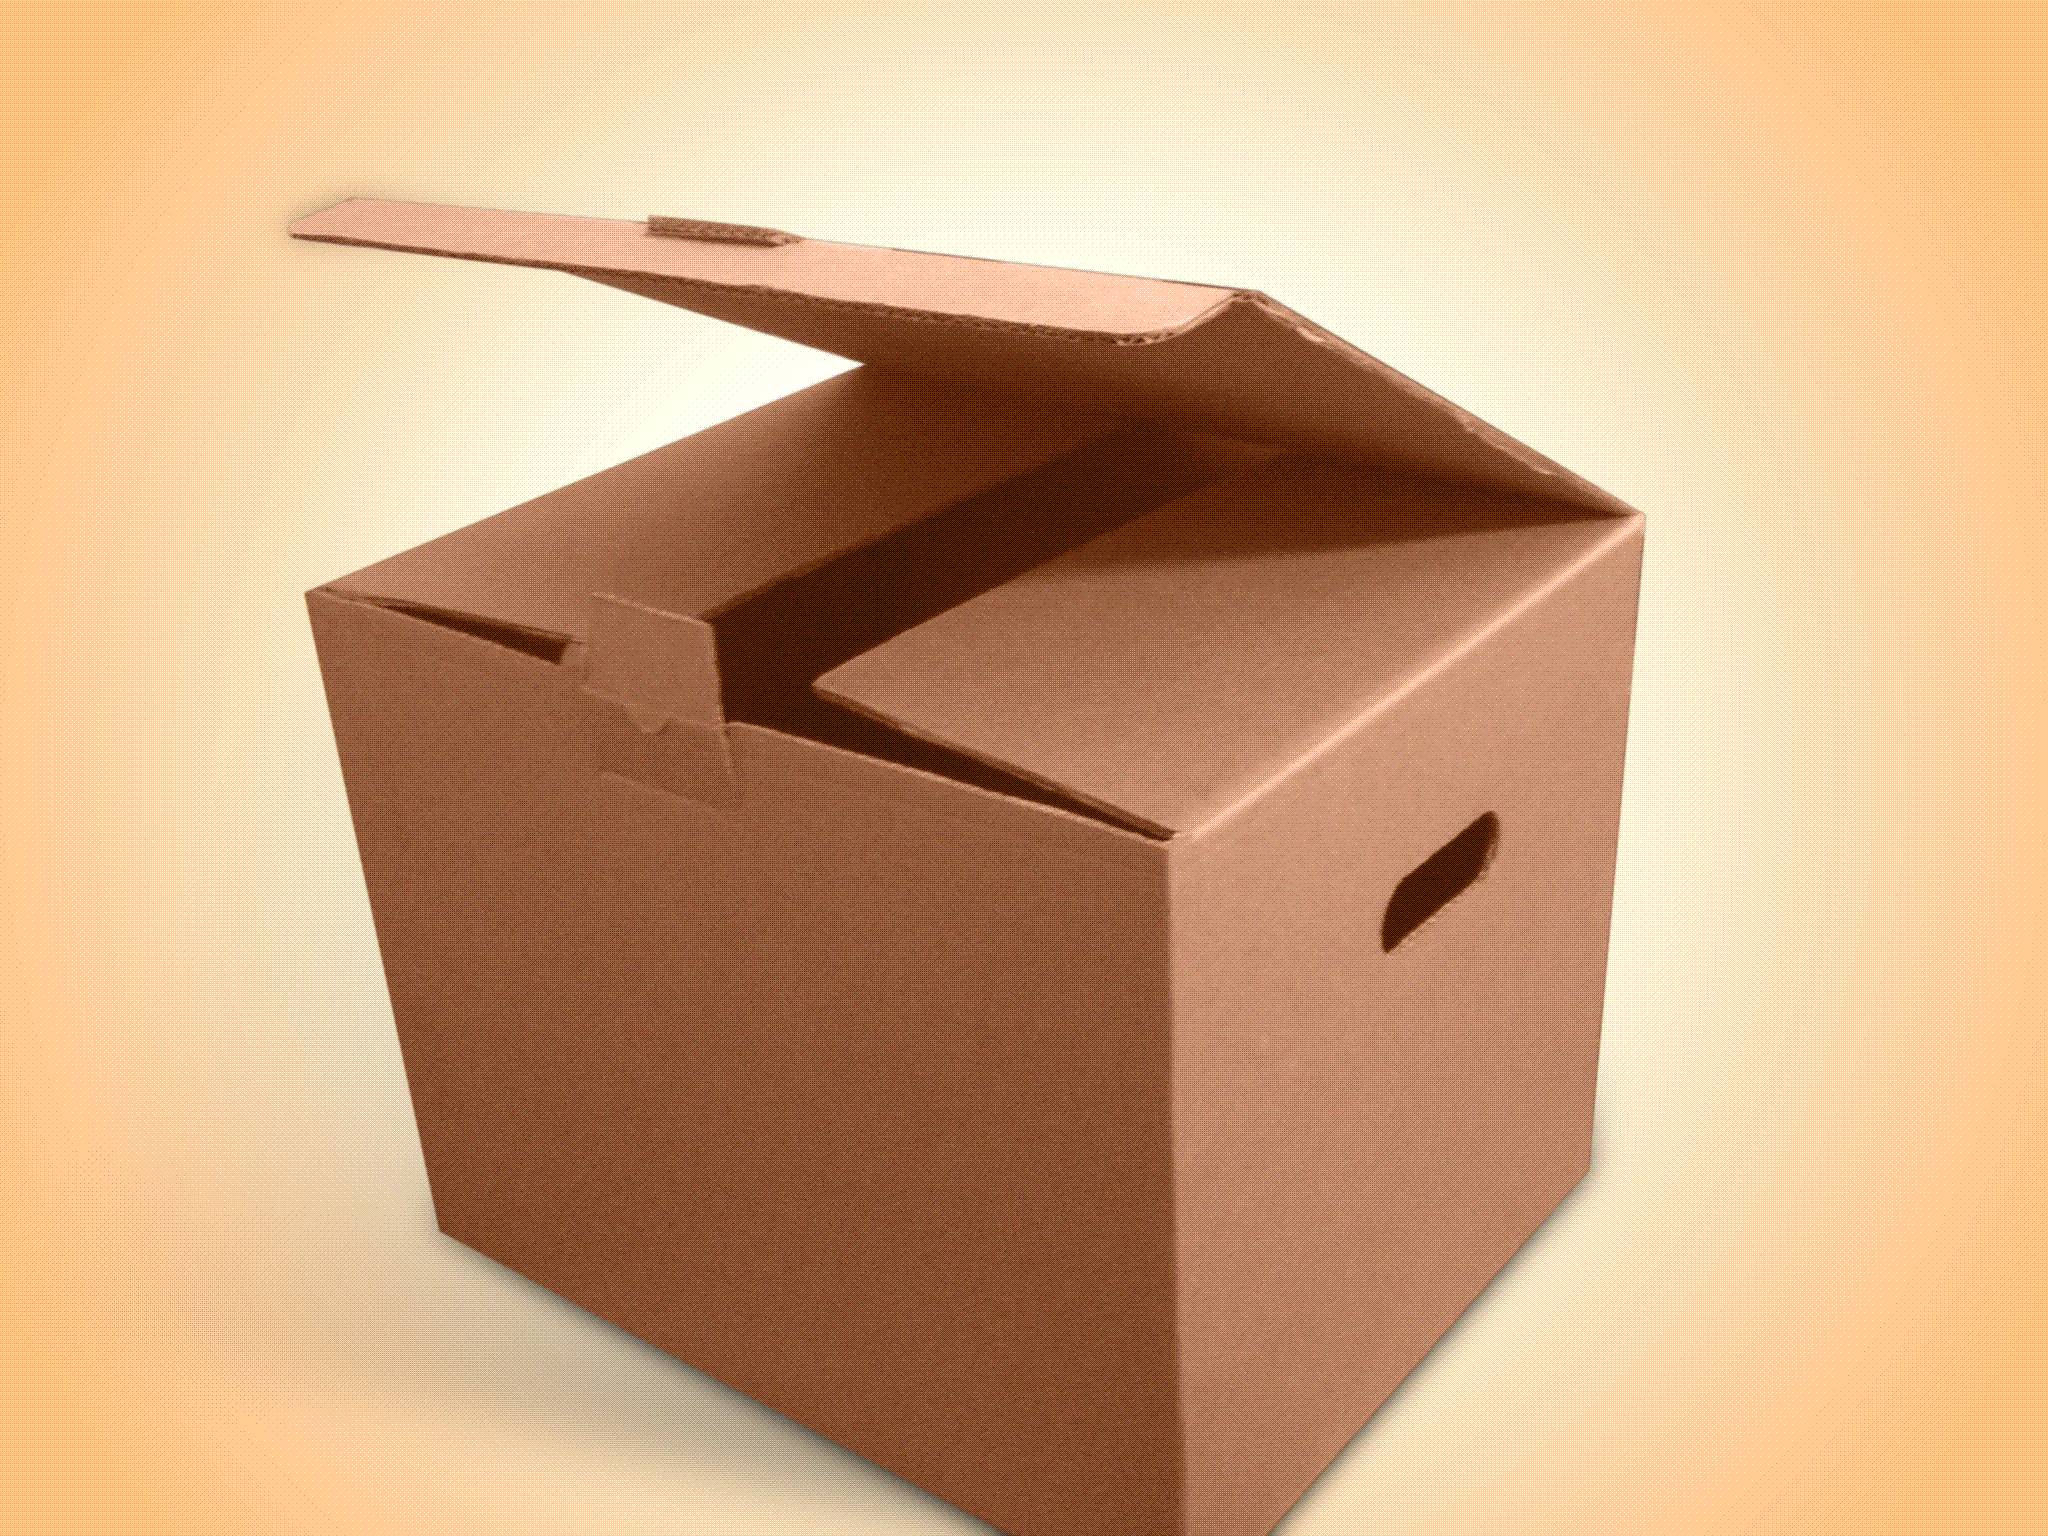 Packing Carton Box Manufacturer, Supplier & Exporter - ecplaza.net